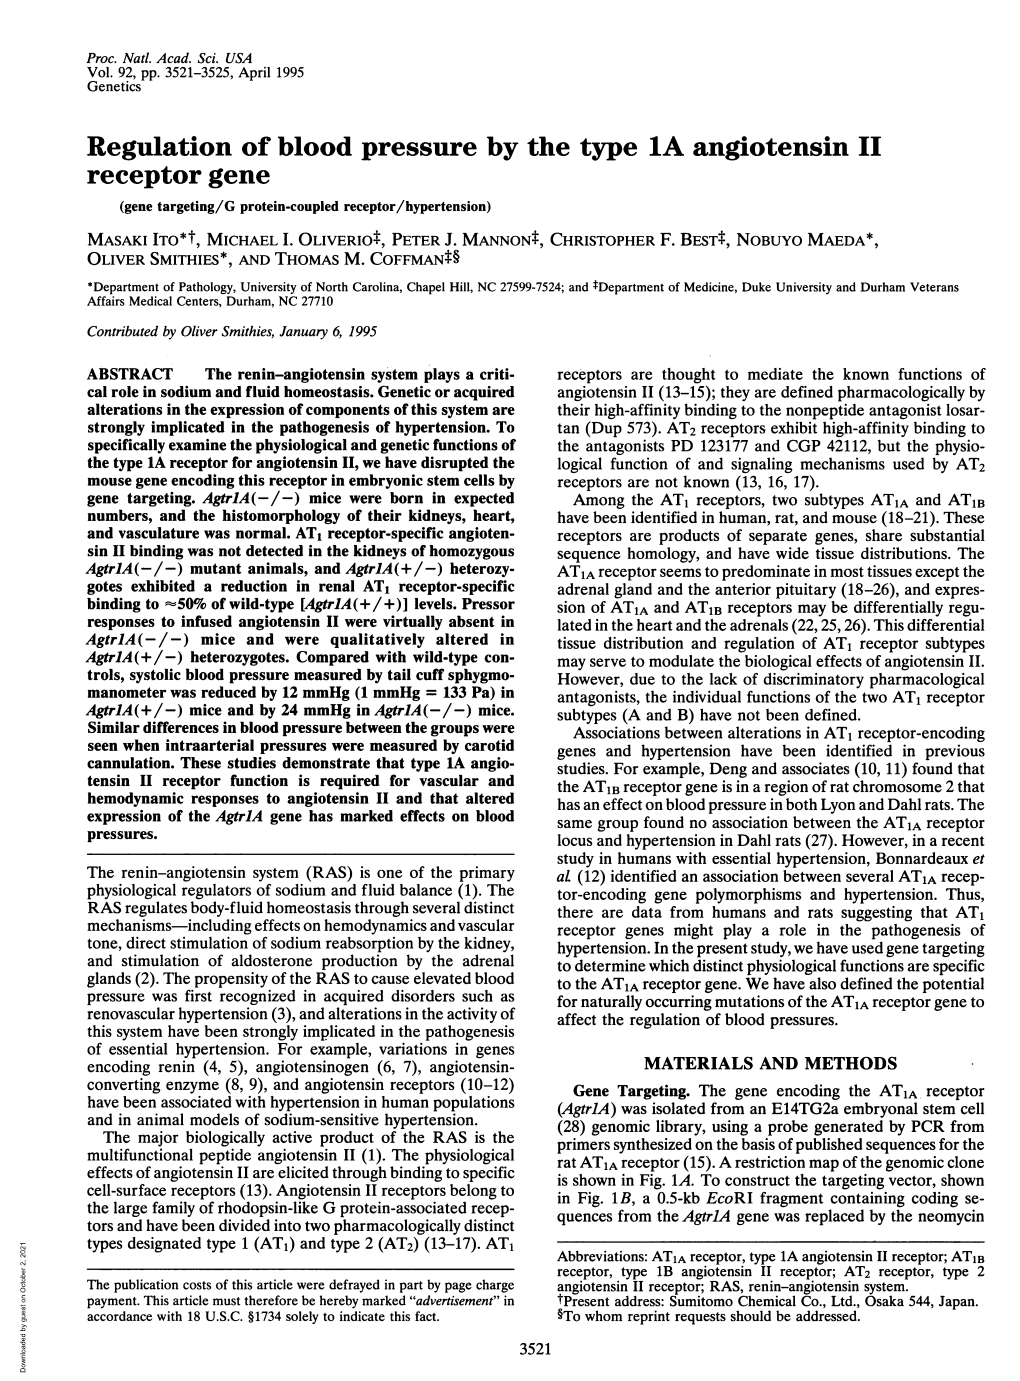 Regulation of Blood Pressure by the Type 1Aangiotensin II Receptor Gene